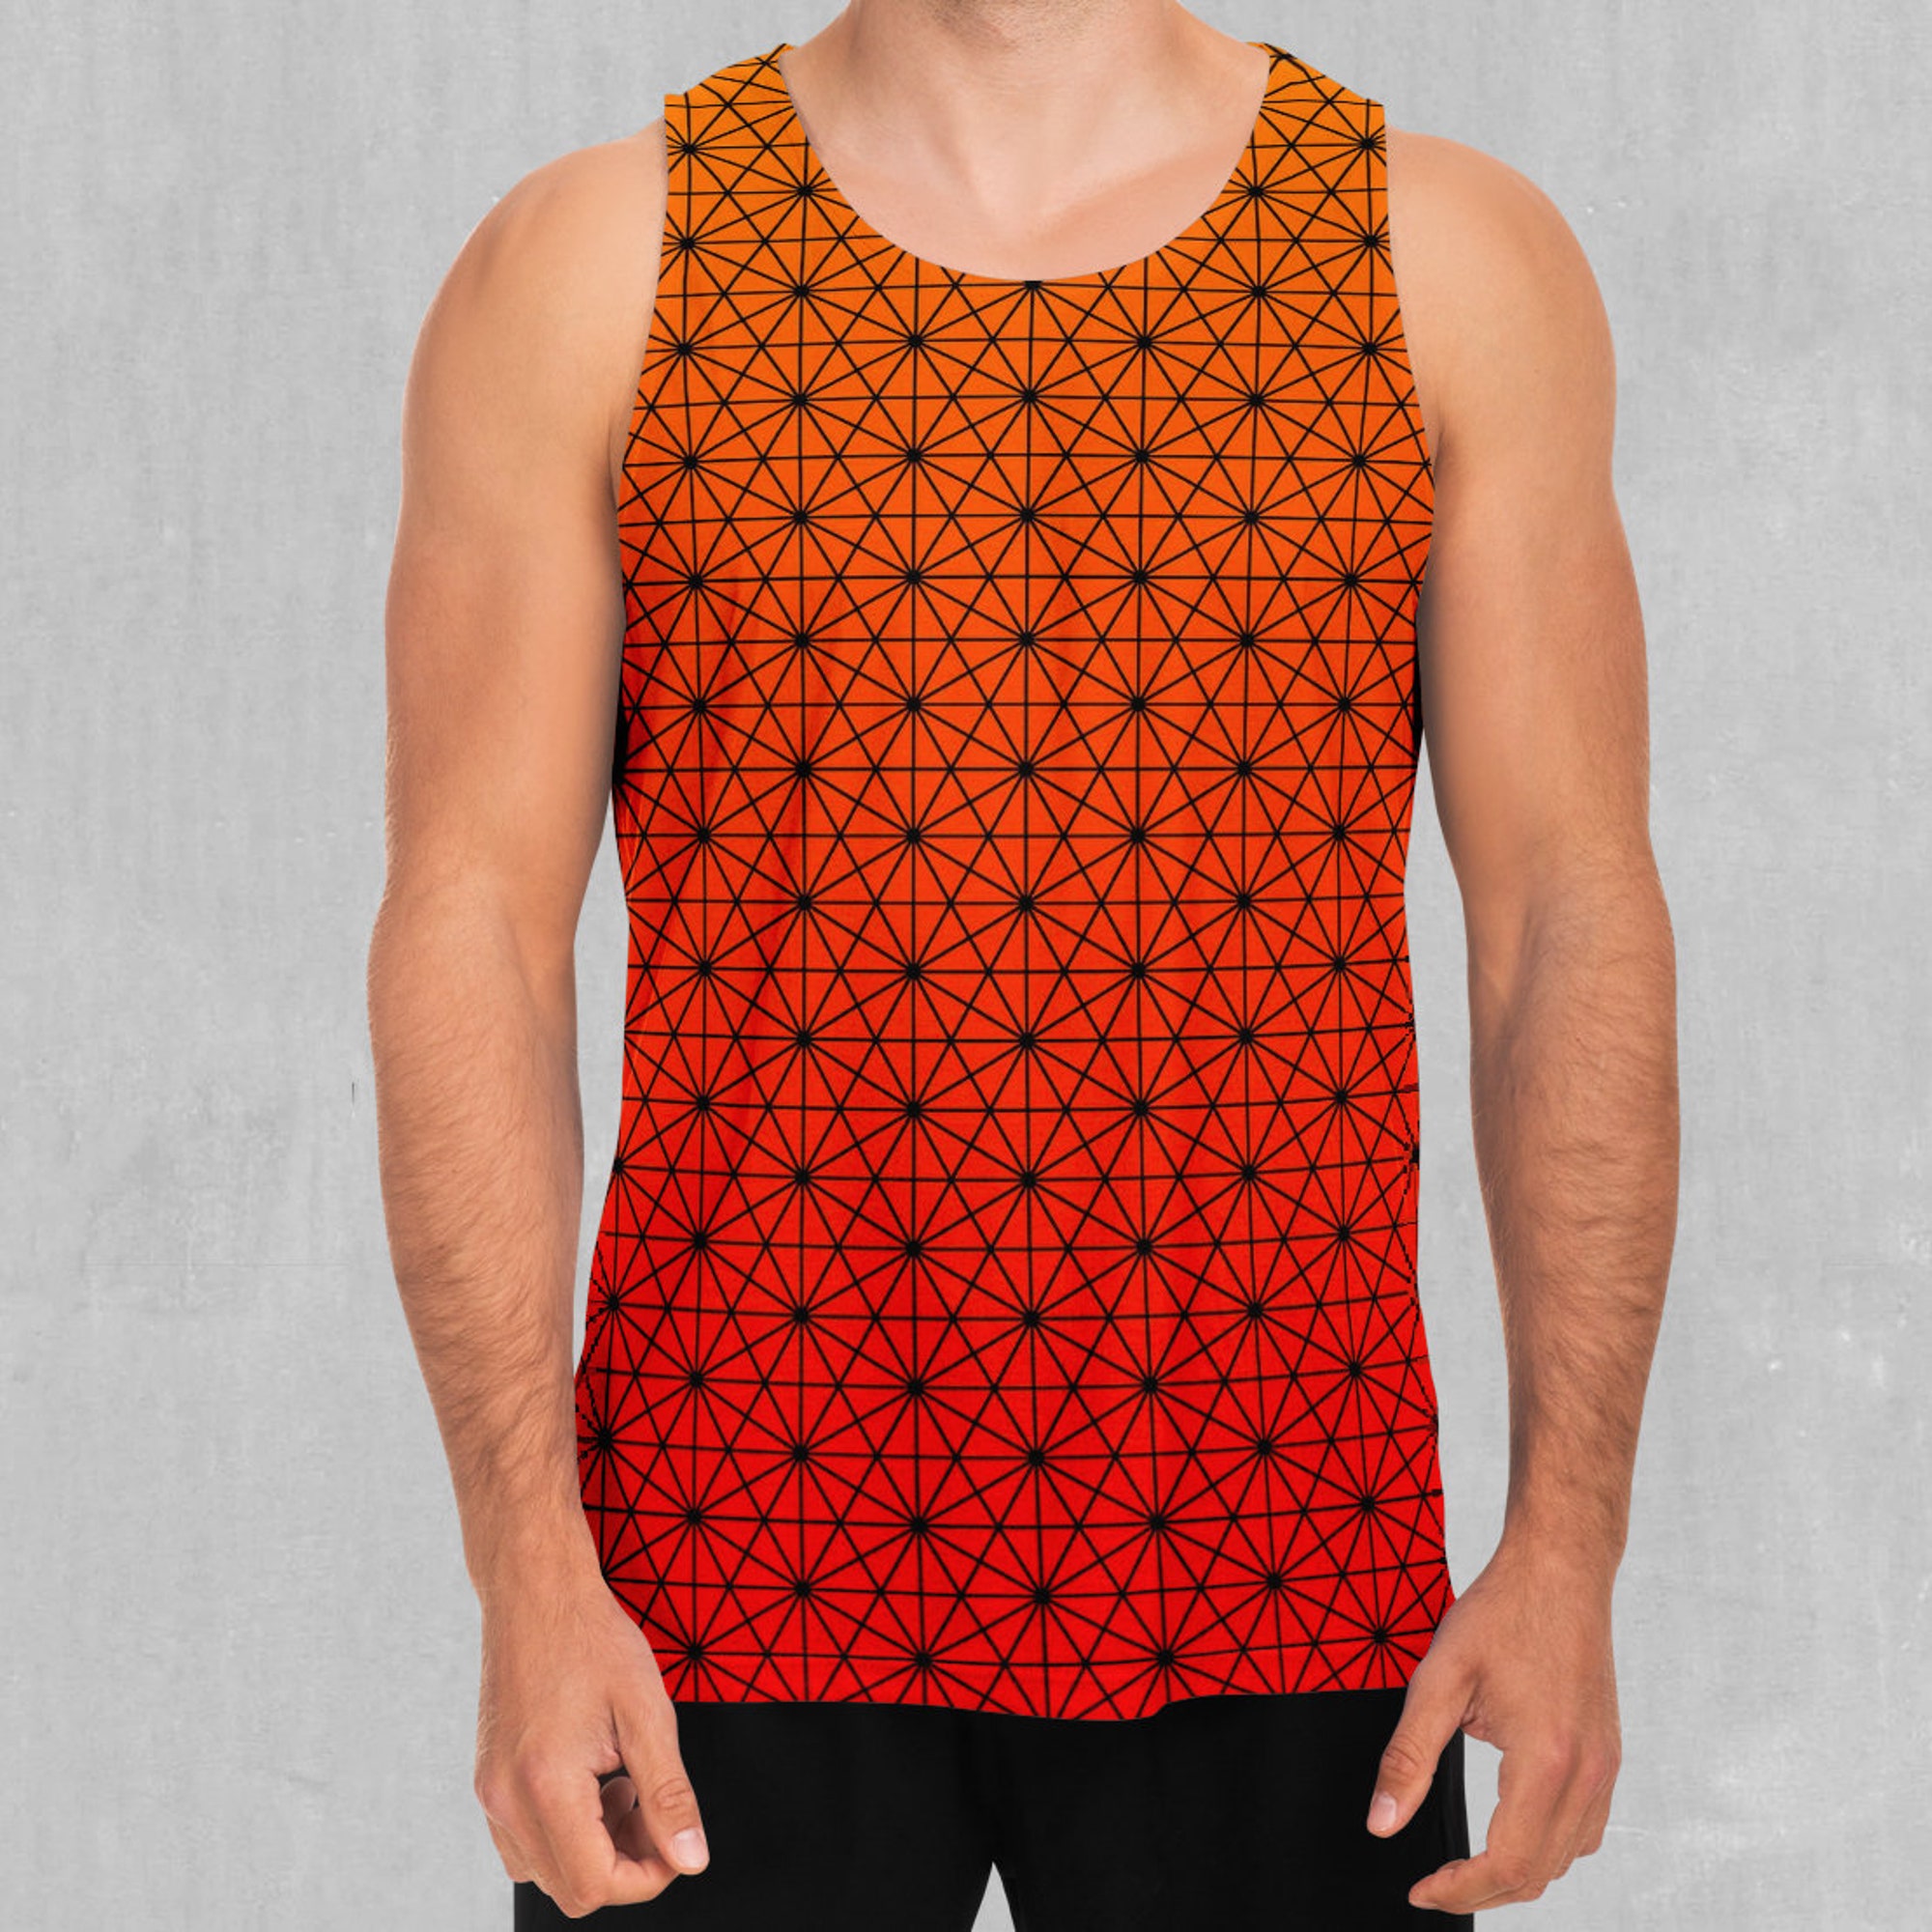 Star Net (Pyro) Men's Tank Top Muscle Sleeveless Shirt